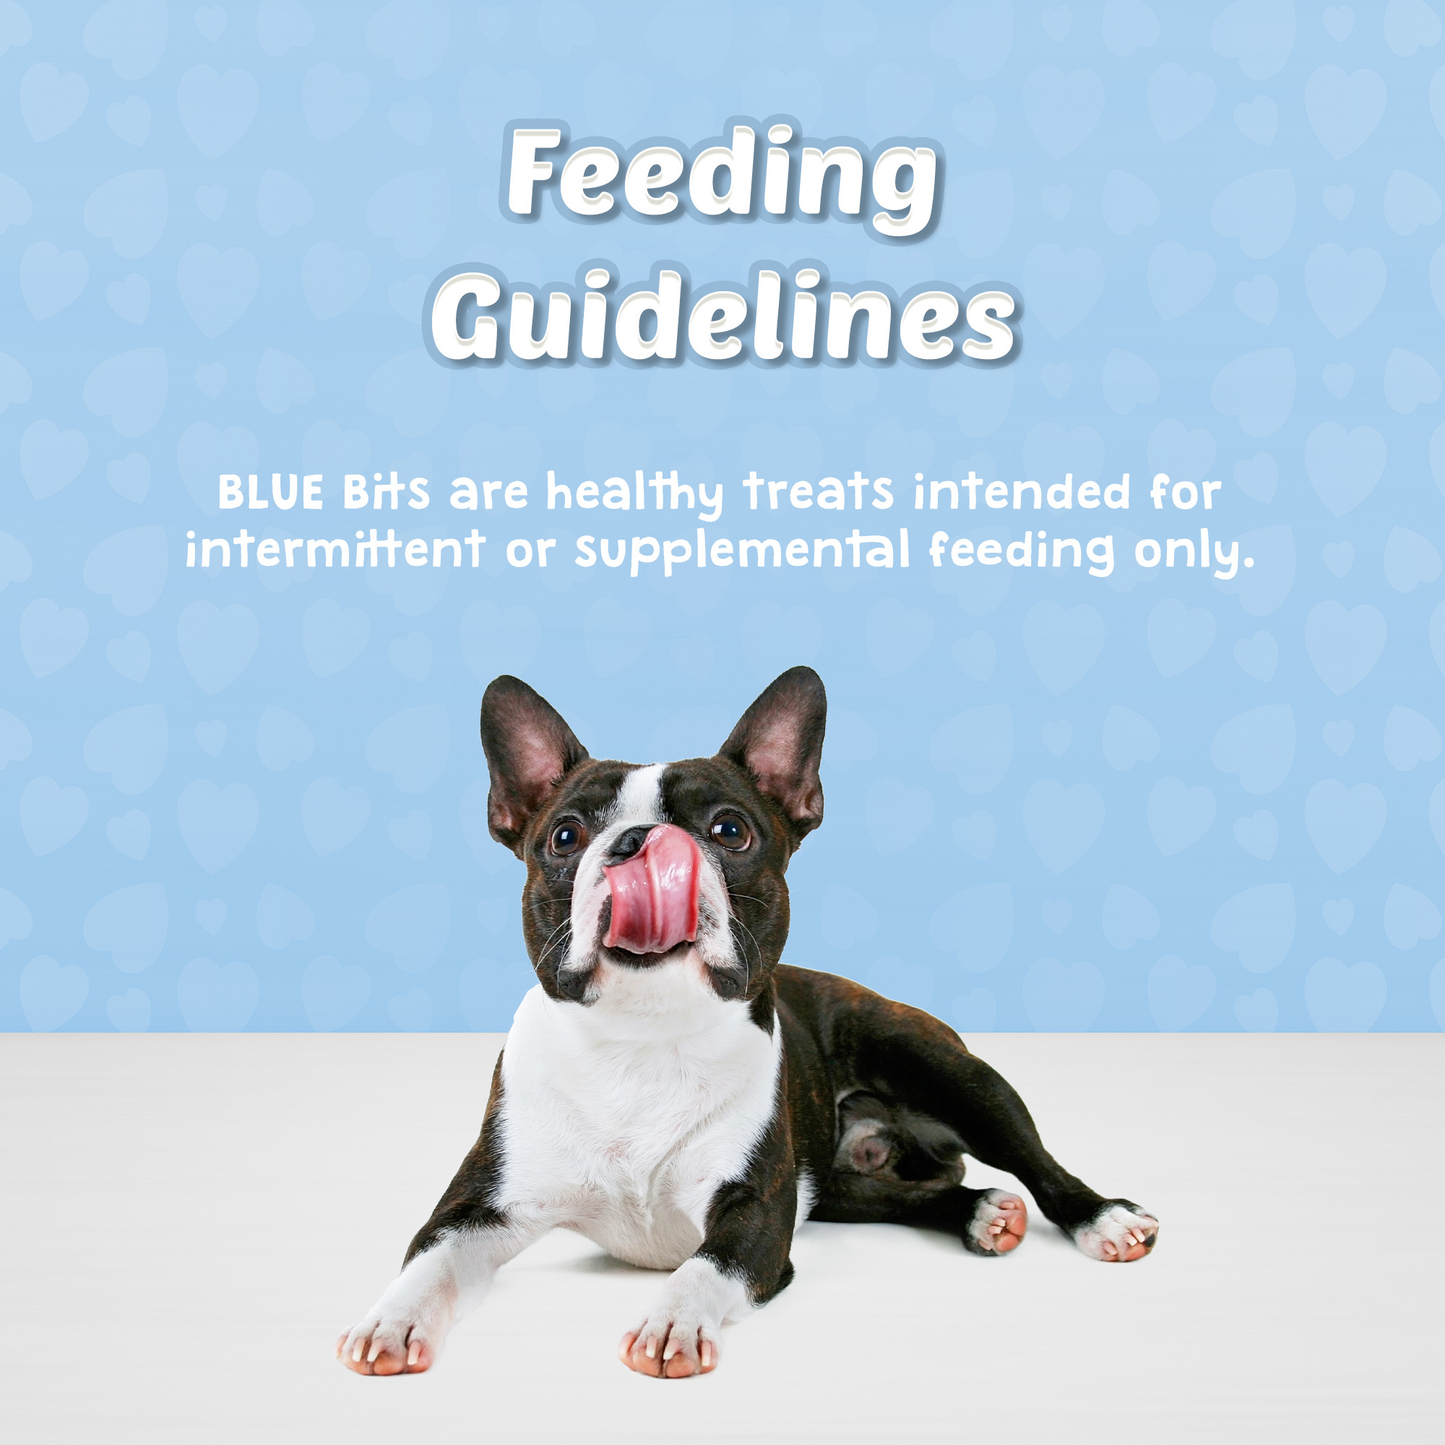 Blue Buffalo BLUE Bits Natural Soft-Moist Training Dog Treats, Chicken, 4oz Bag